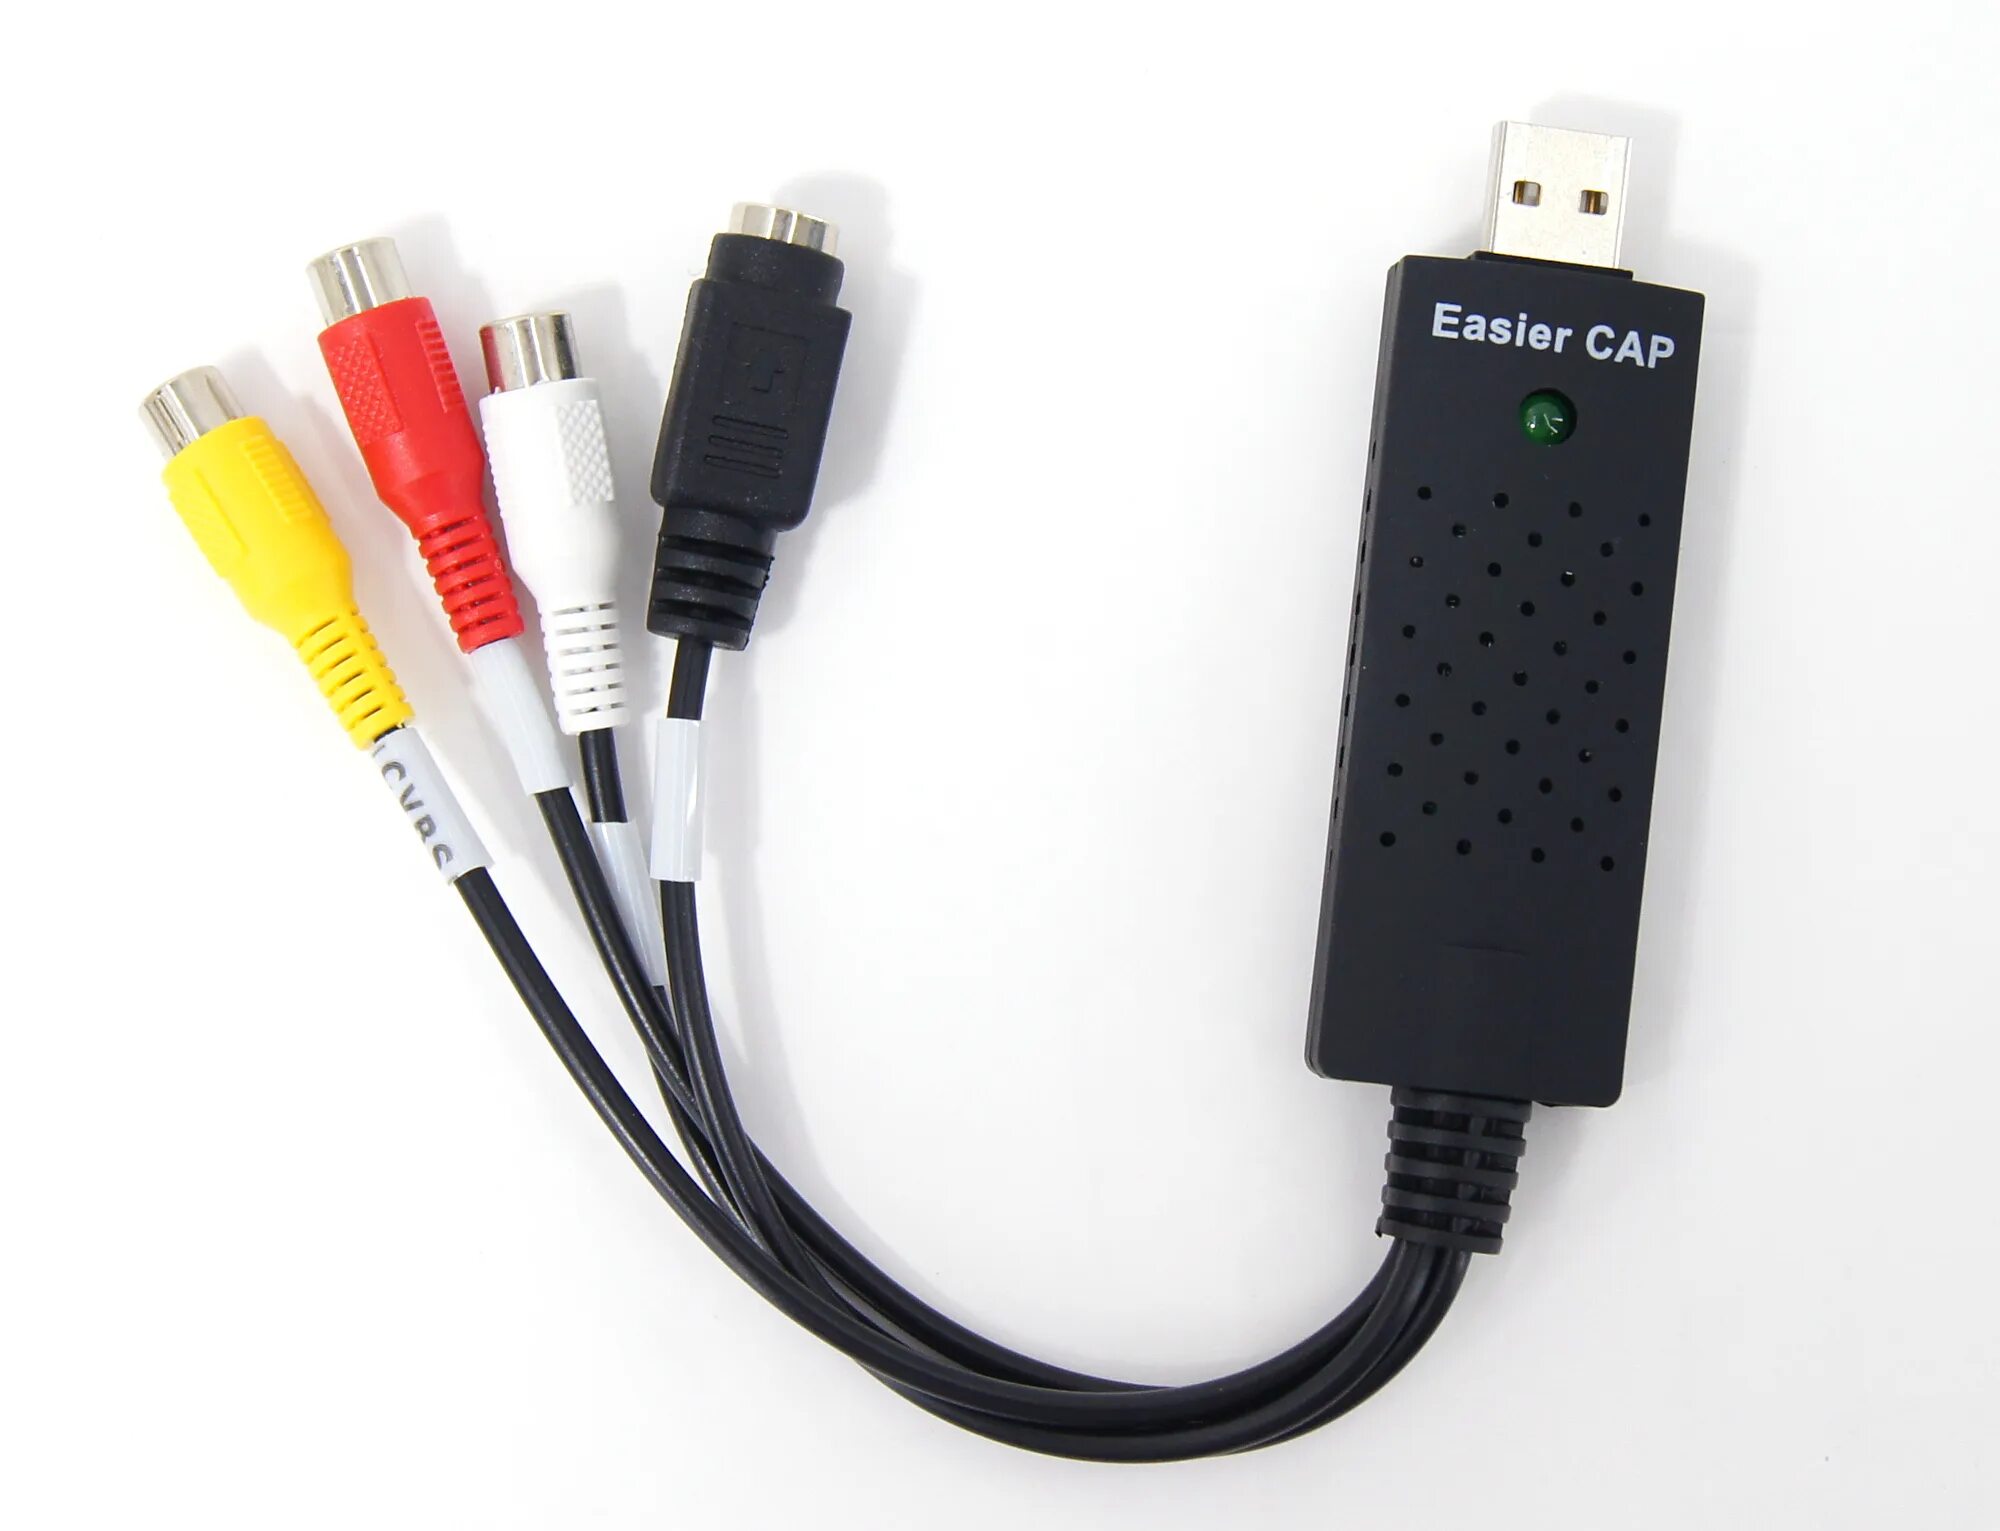 EASYCAP. Easier cap. VIDEODVR easier cap. Easier cap 2022. Easycap захват